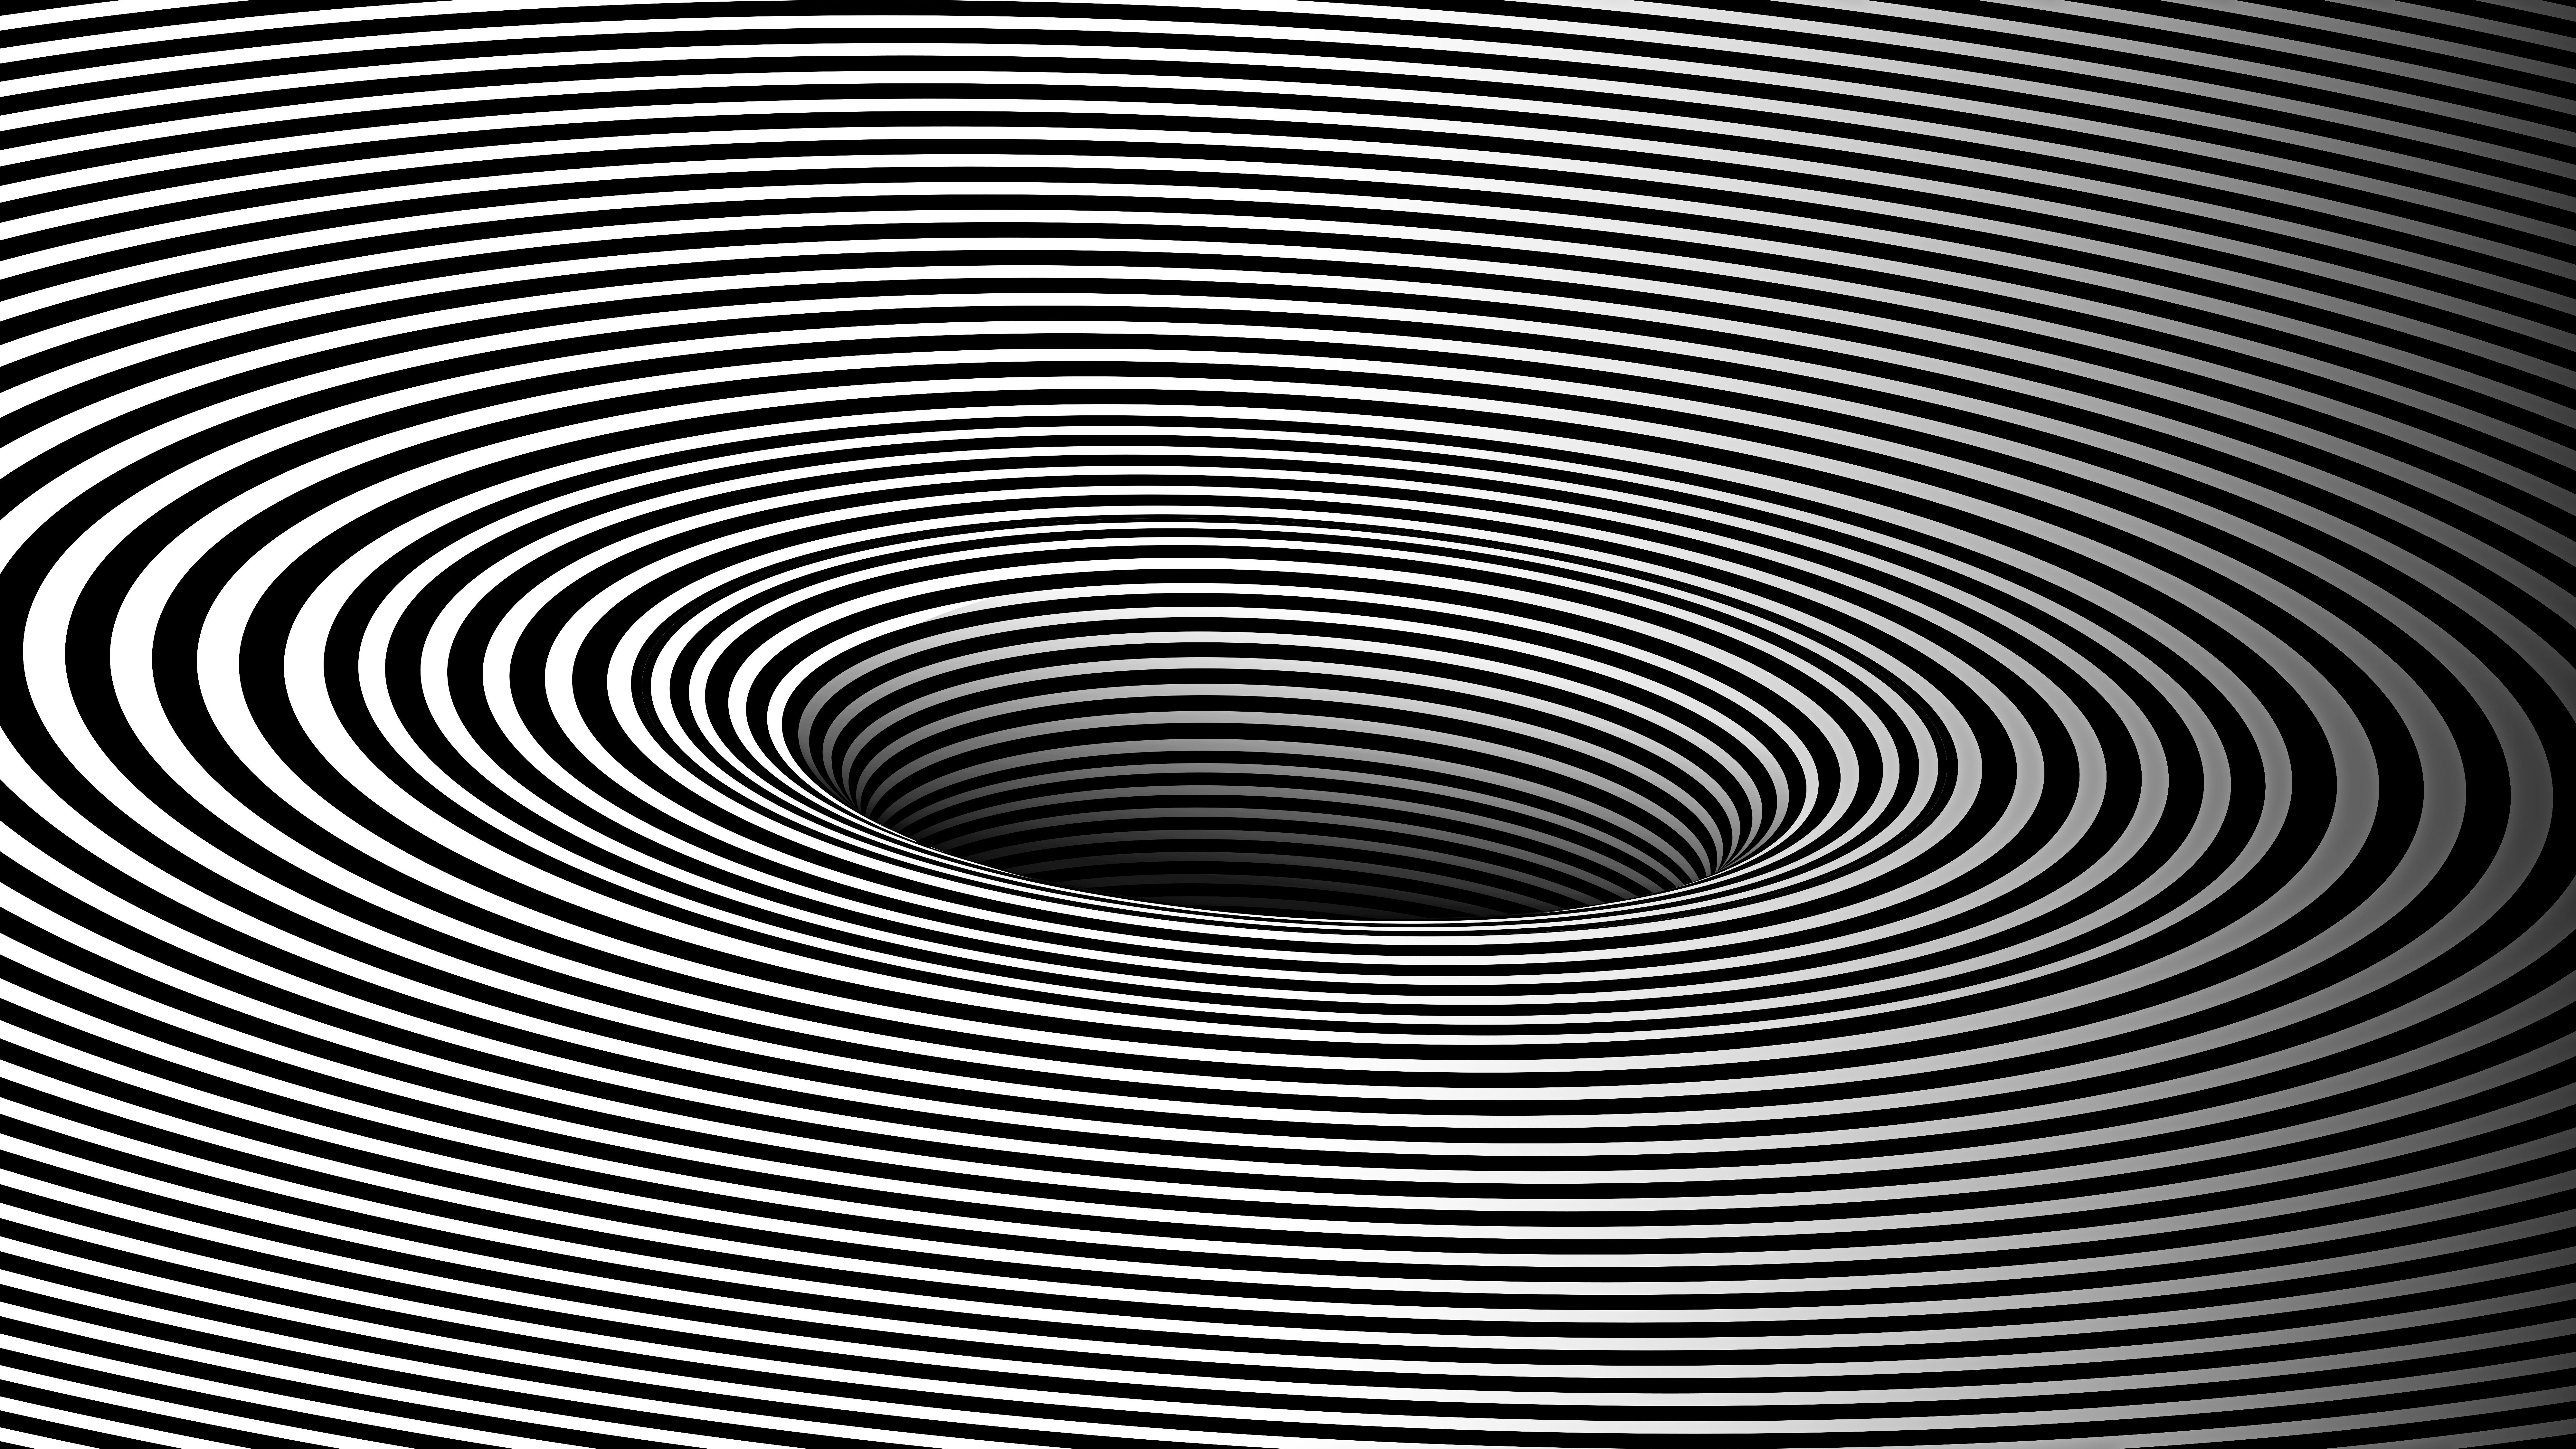 optical illusion, illusion, artistic, black & white